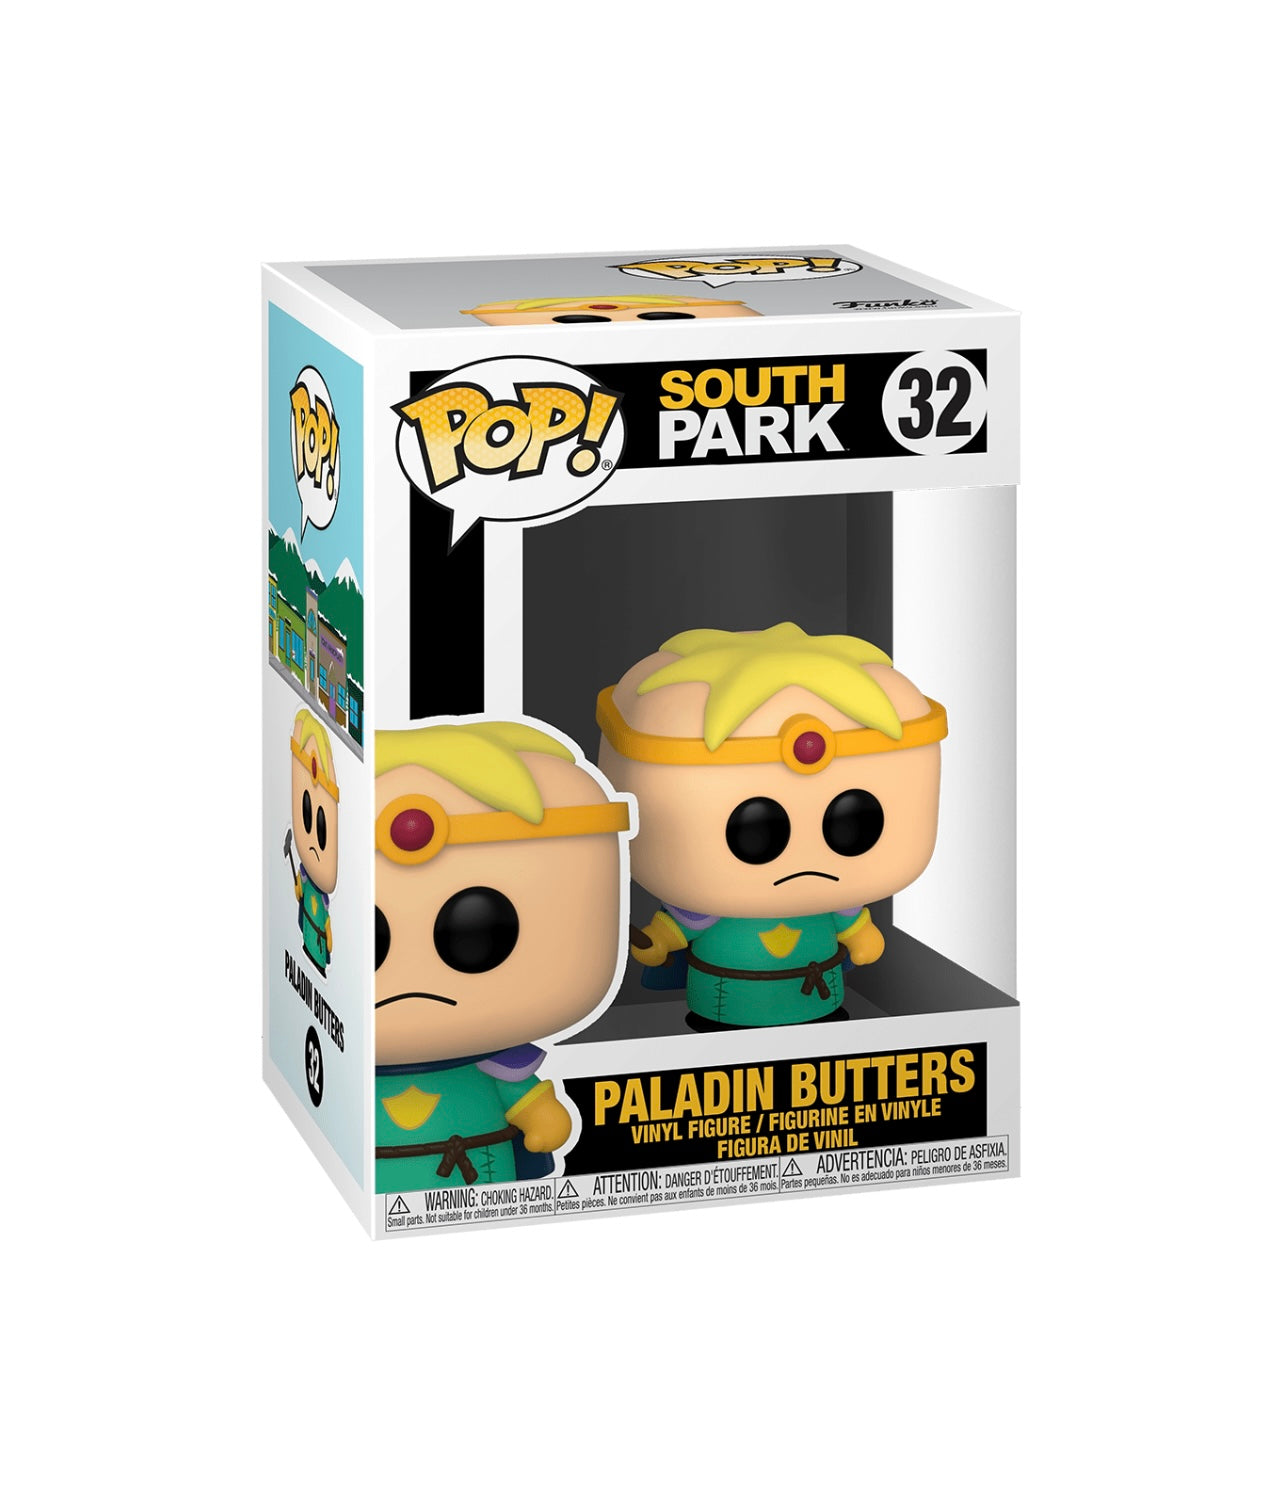 POP! TV South Park Paladin Butters #32